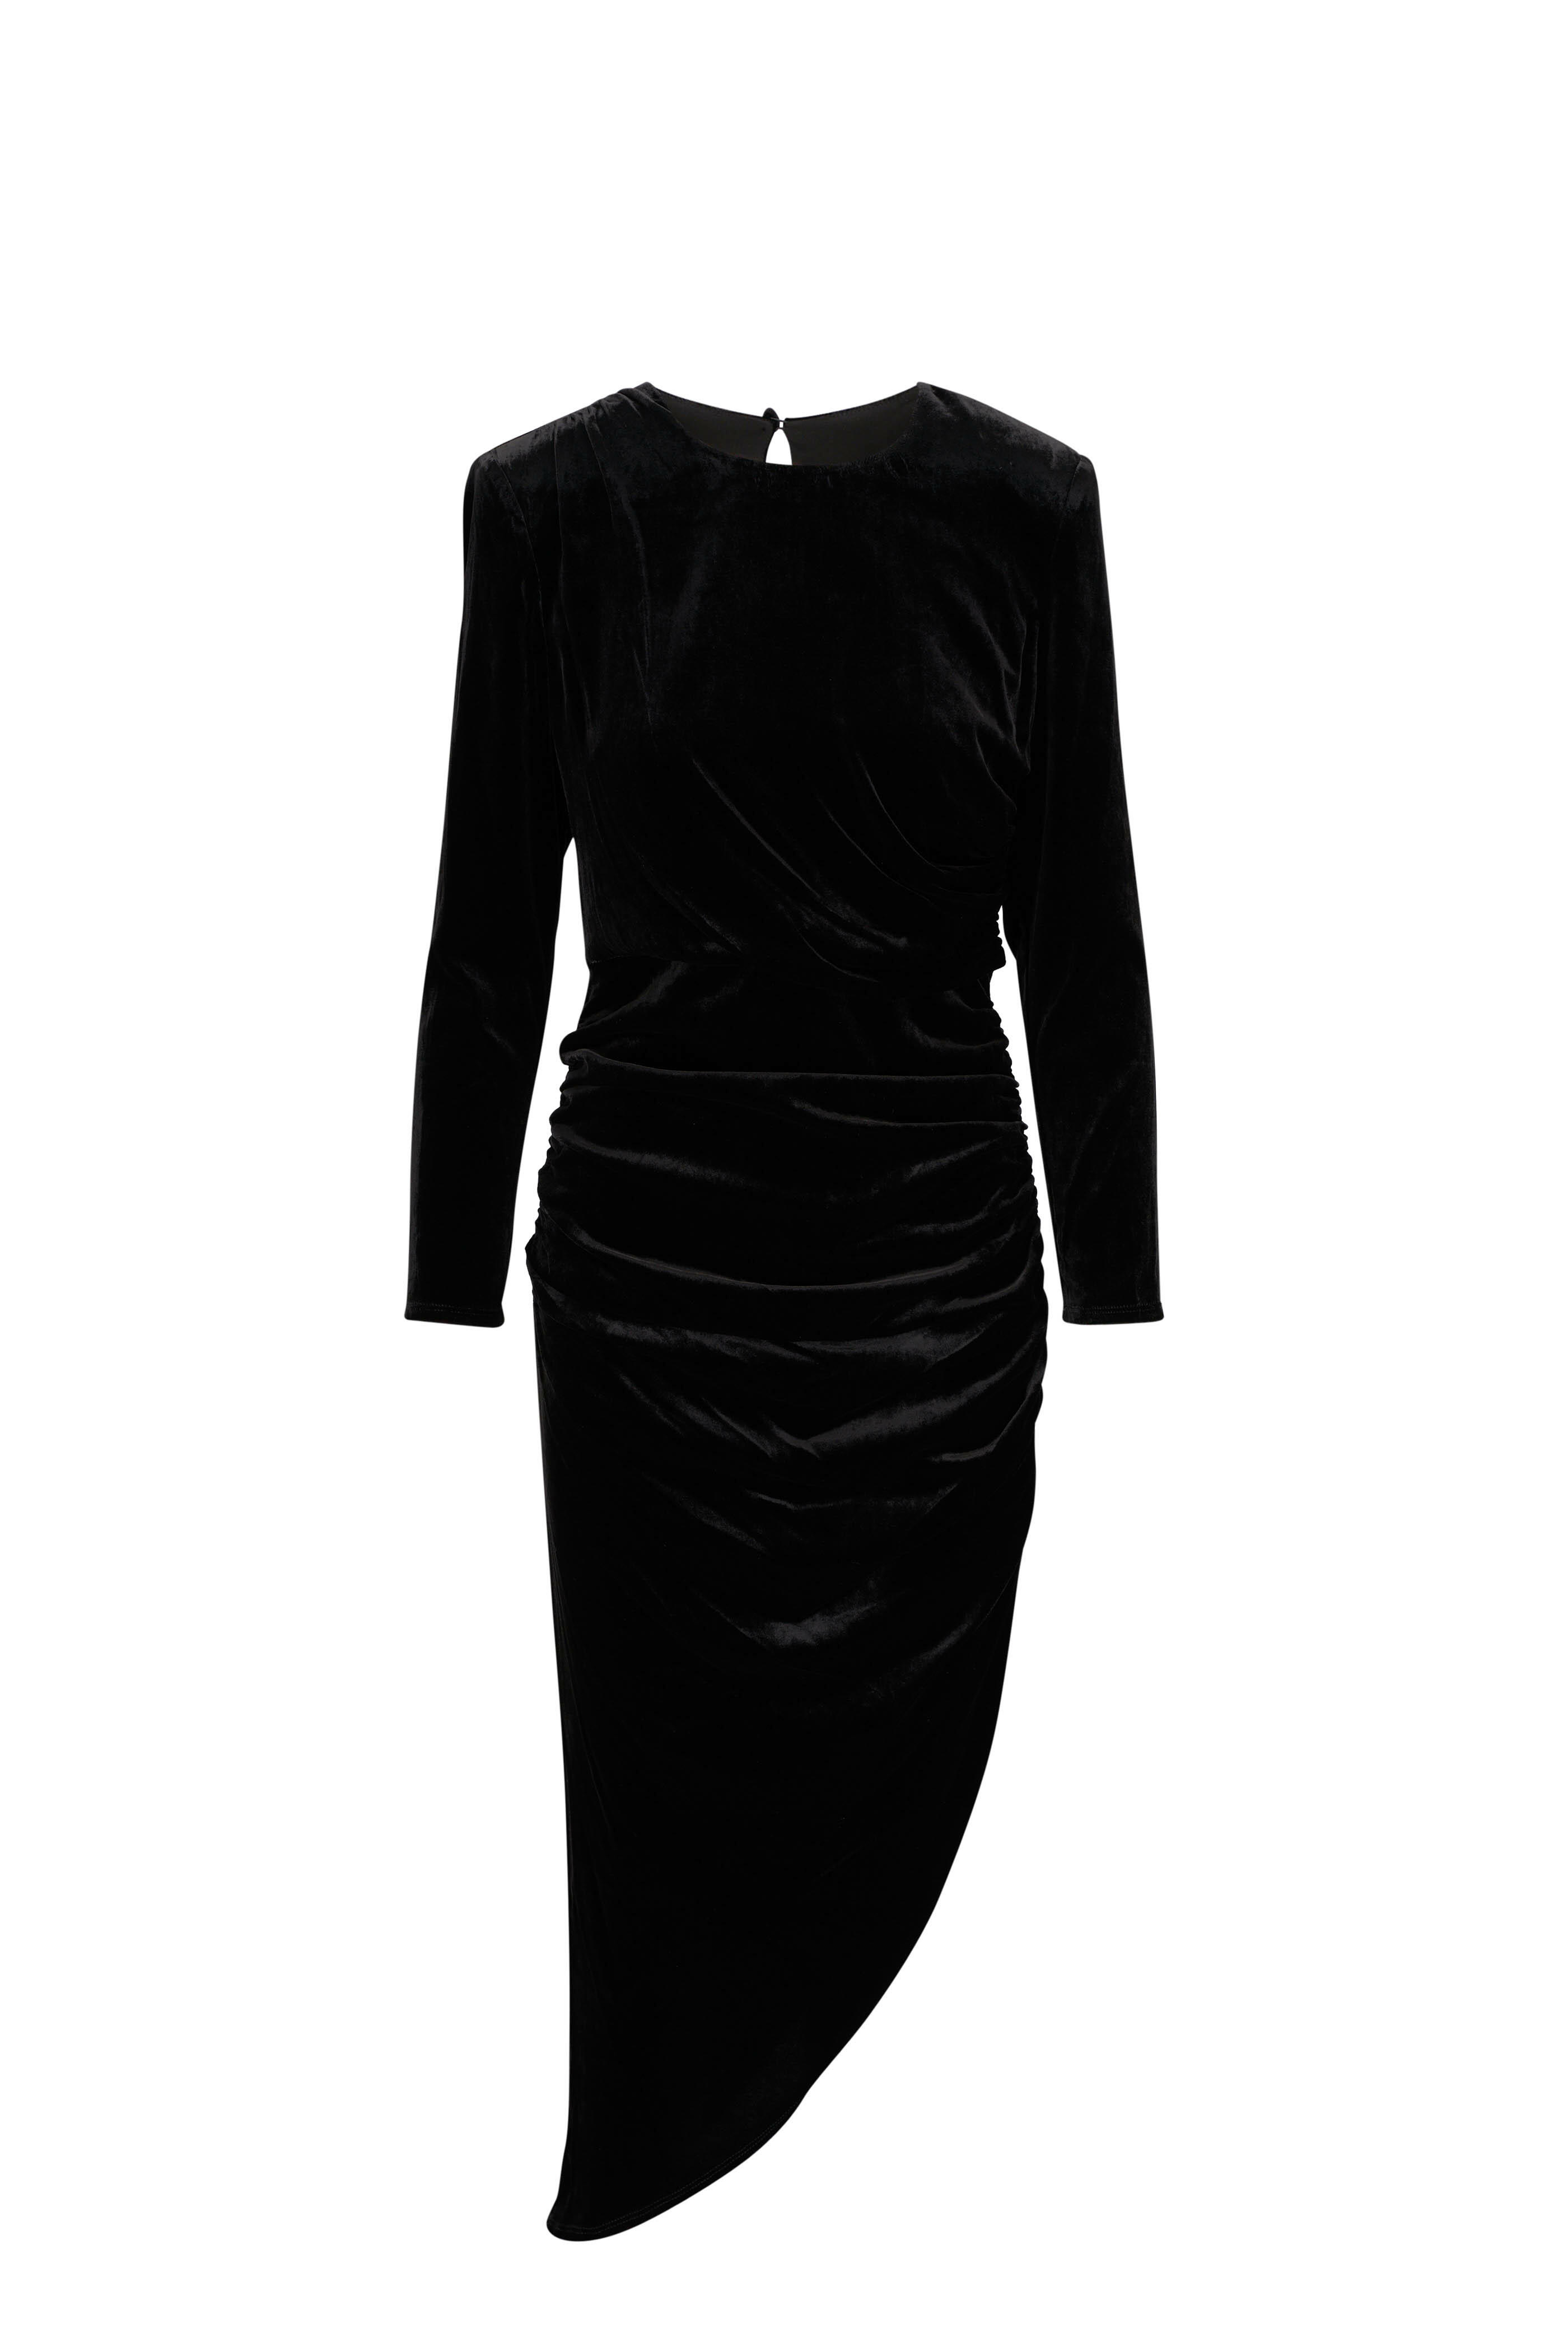 Veronica Beard - Tristana Black Stretch Velvet Dress